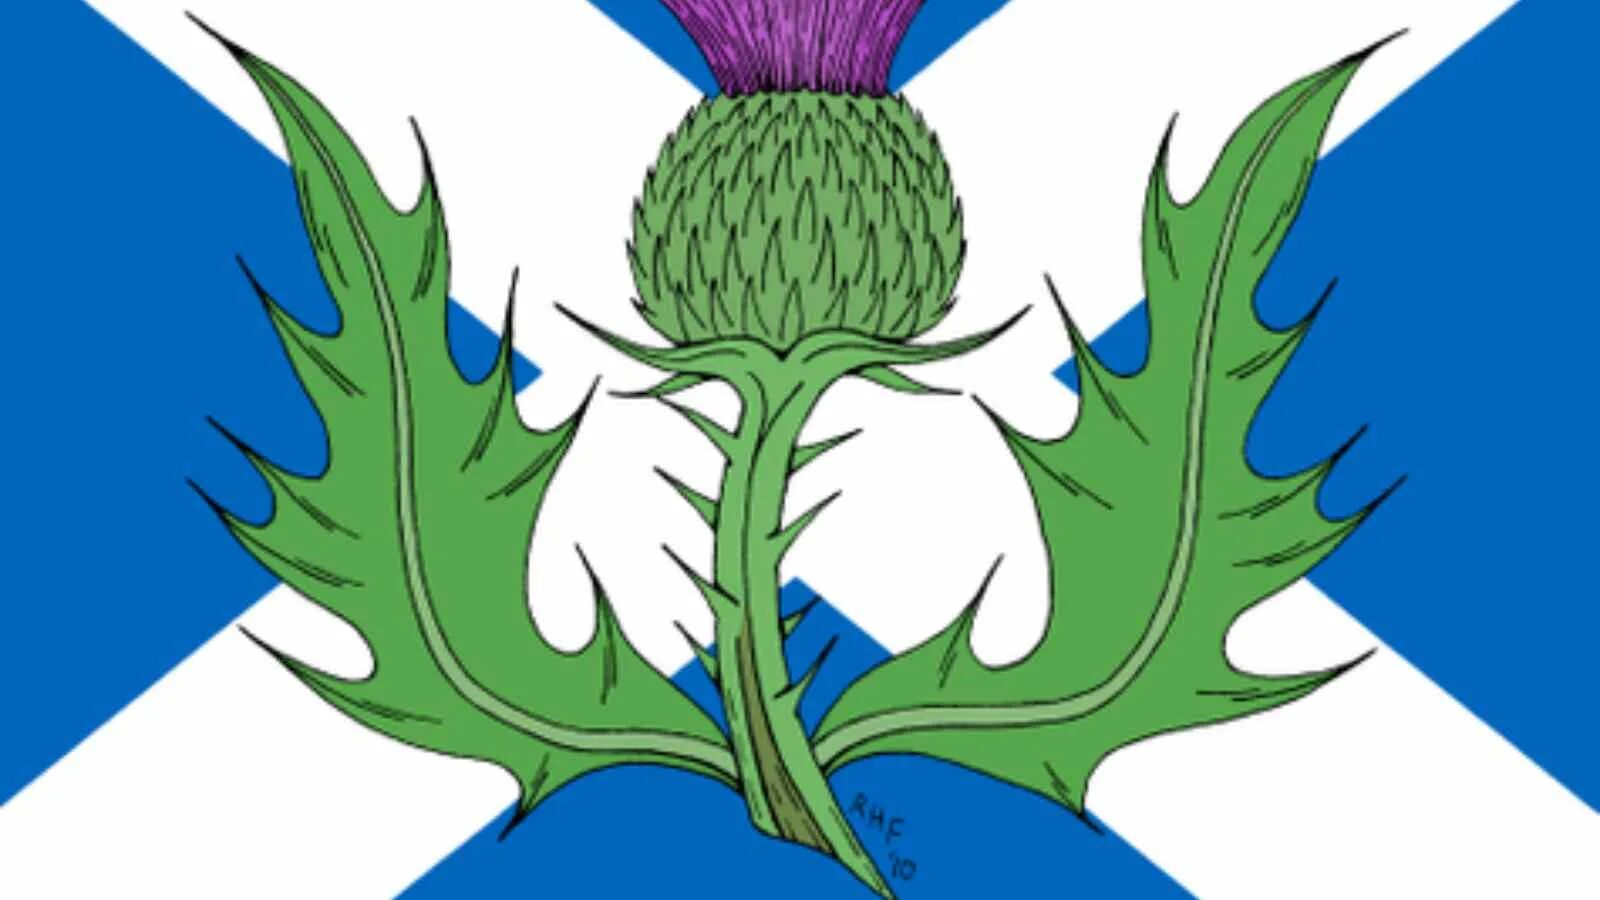 Чертополох символ Шотландии. Цветок чертополоха символ Шотландии. Растение символ Шотландии. Национальный символ Шотландии.